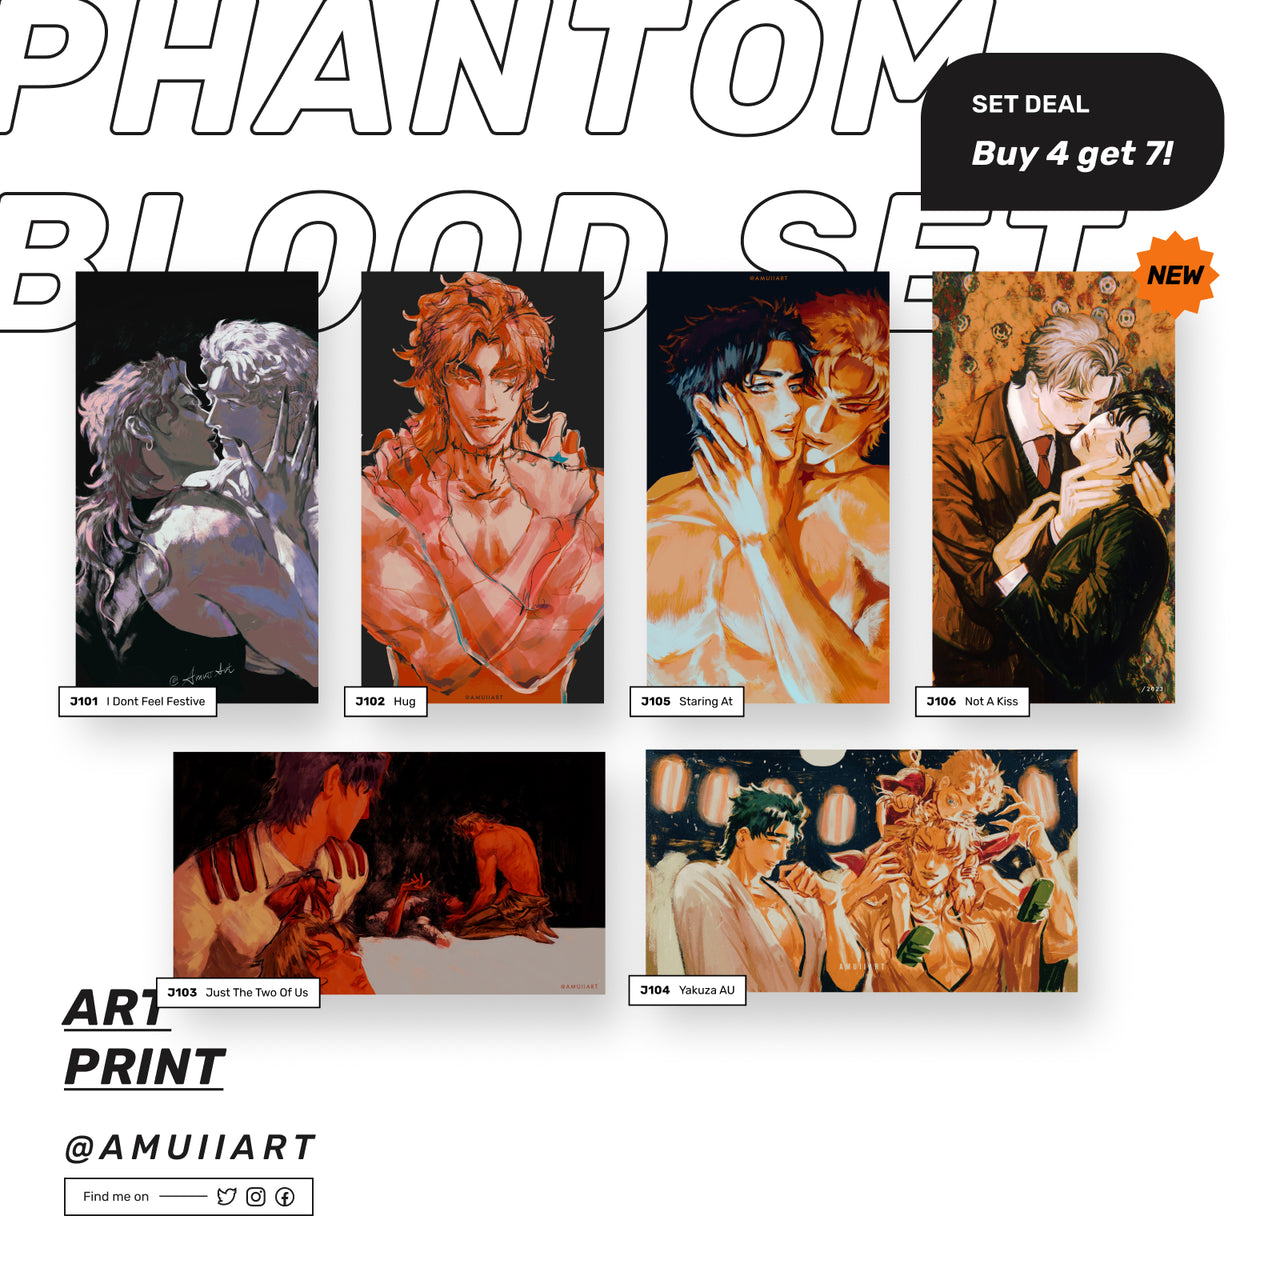 Part 1. Phantom Blood / JJBA Art print